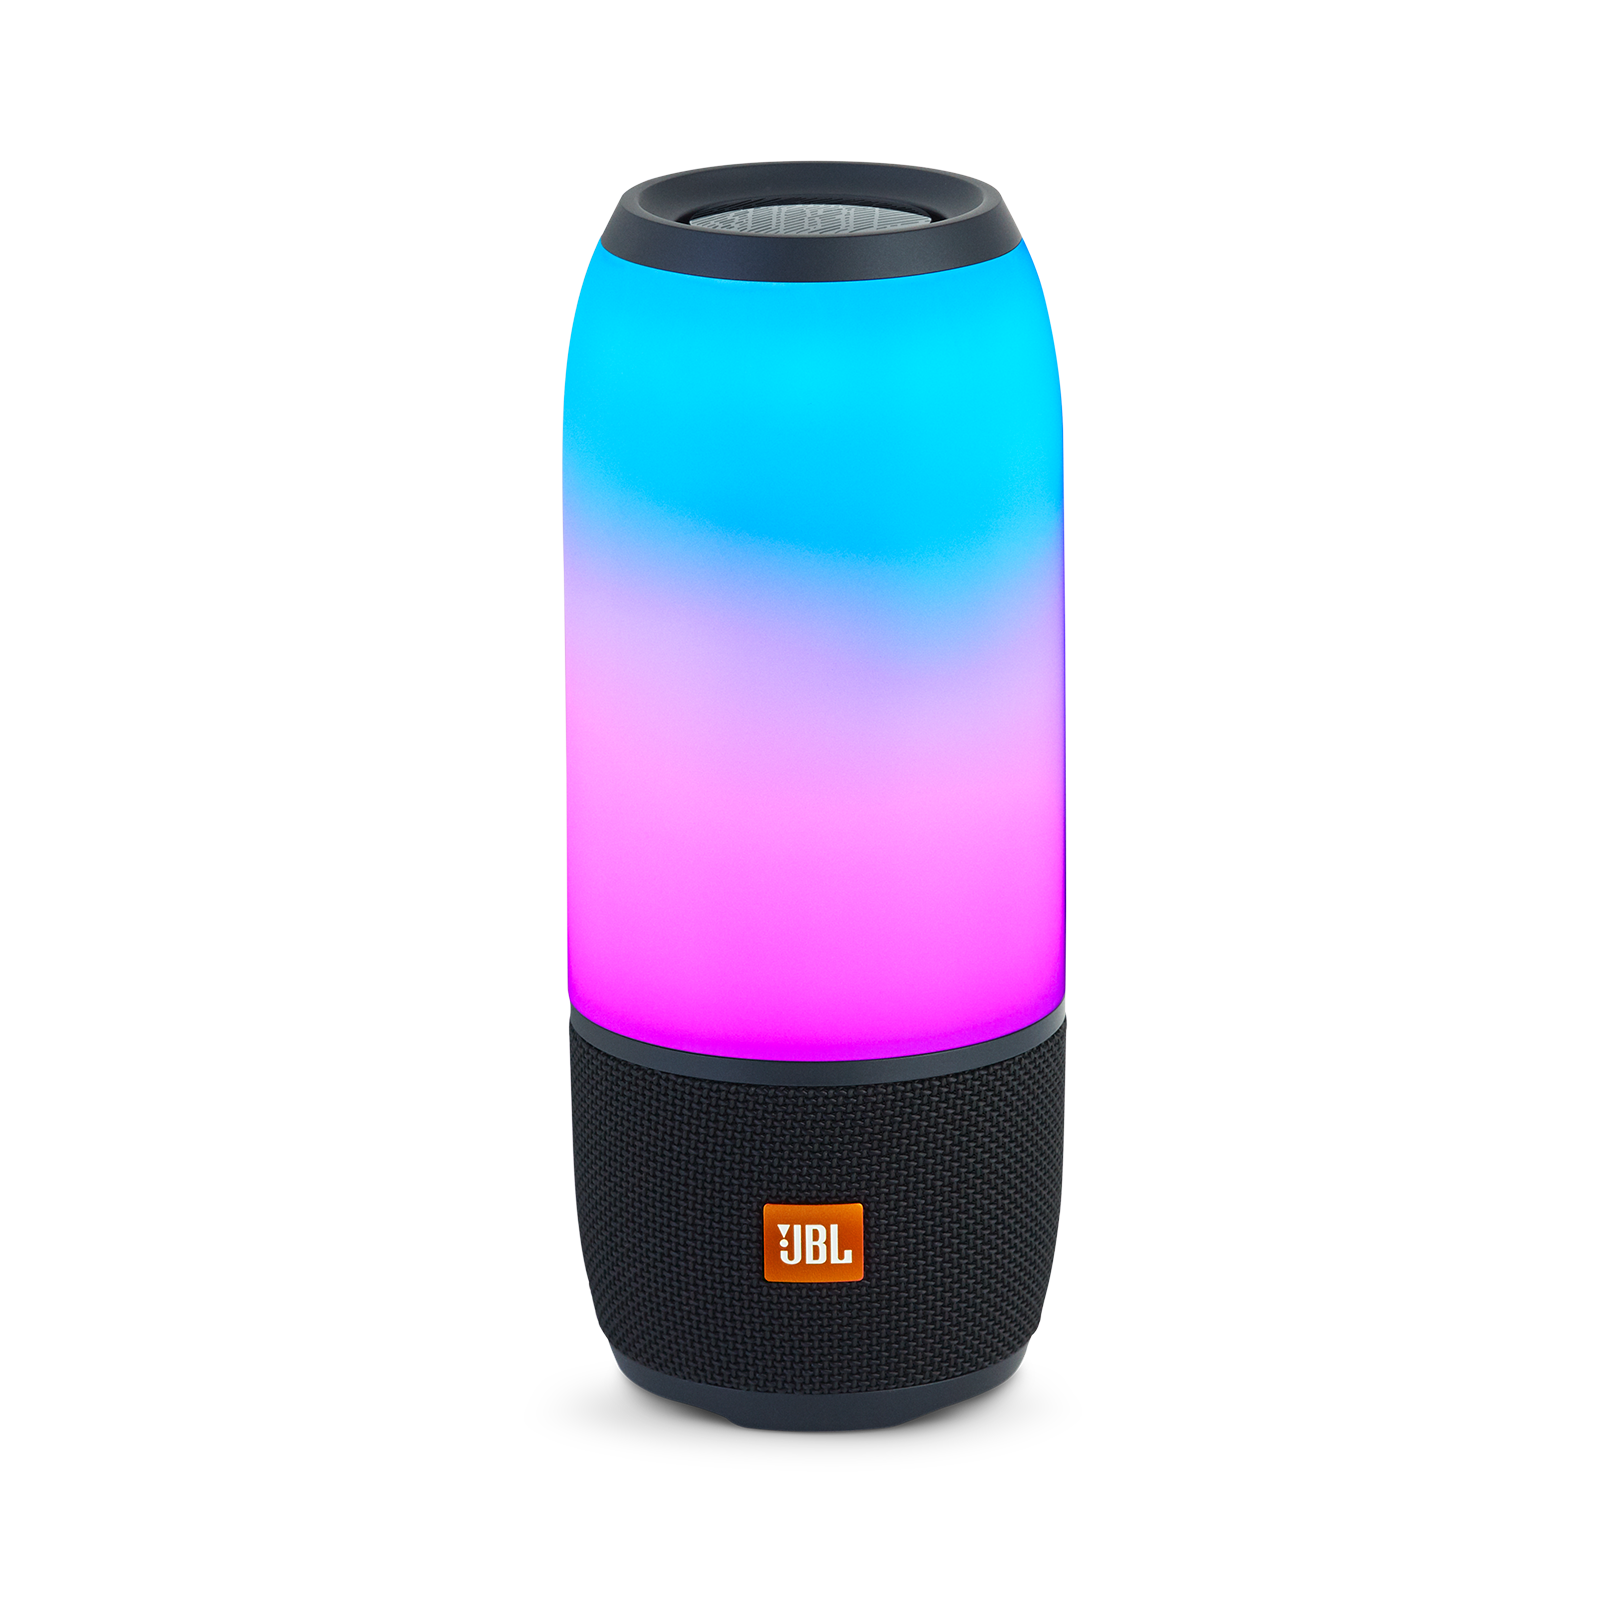 jbl colorful speaker